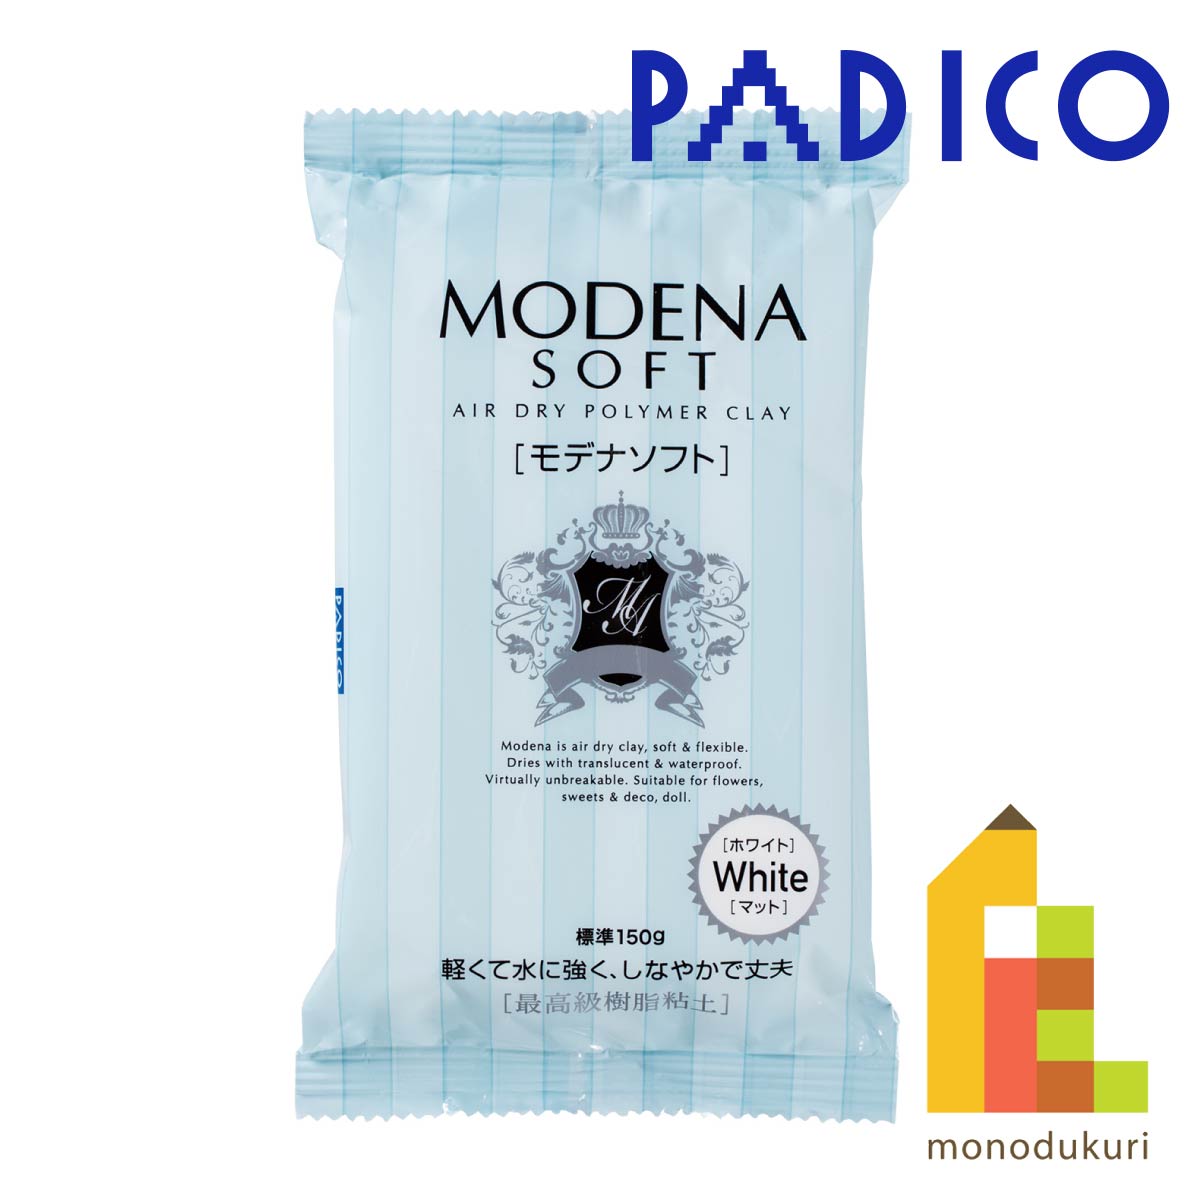 pajikoPADICO modena soft 150g